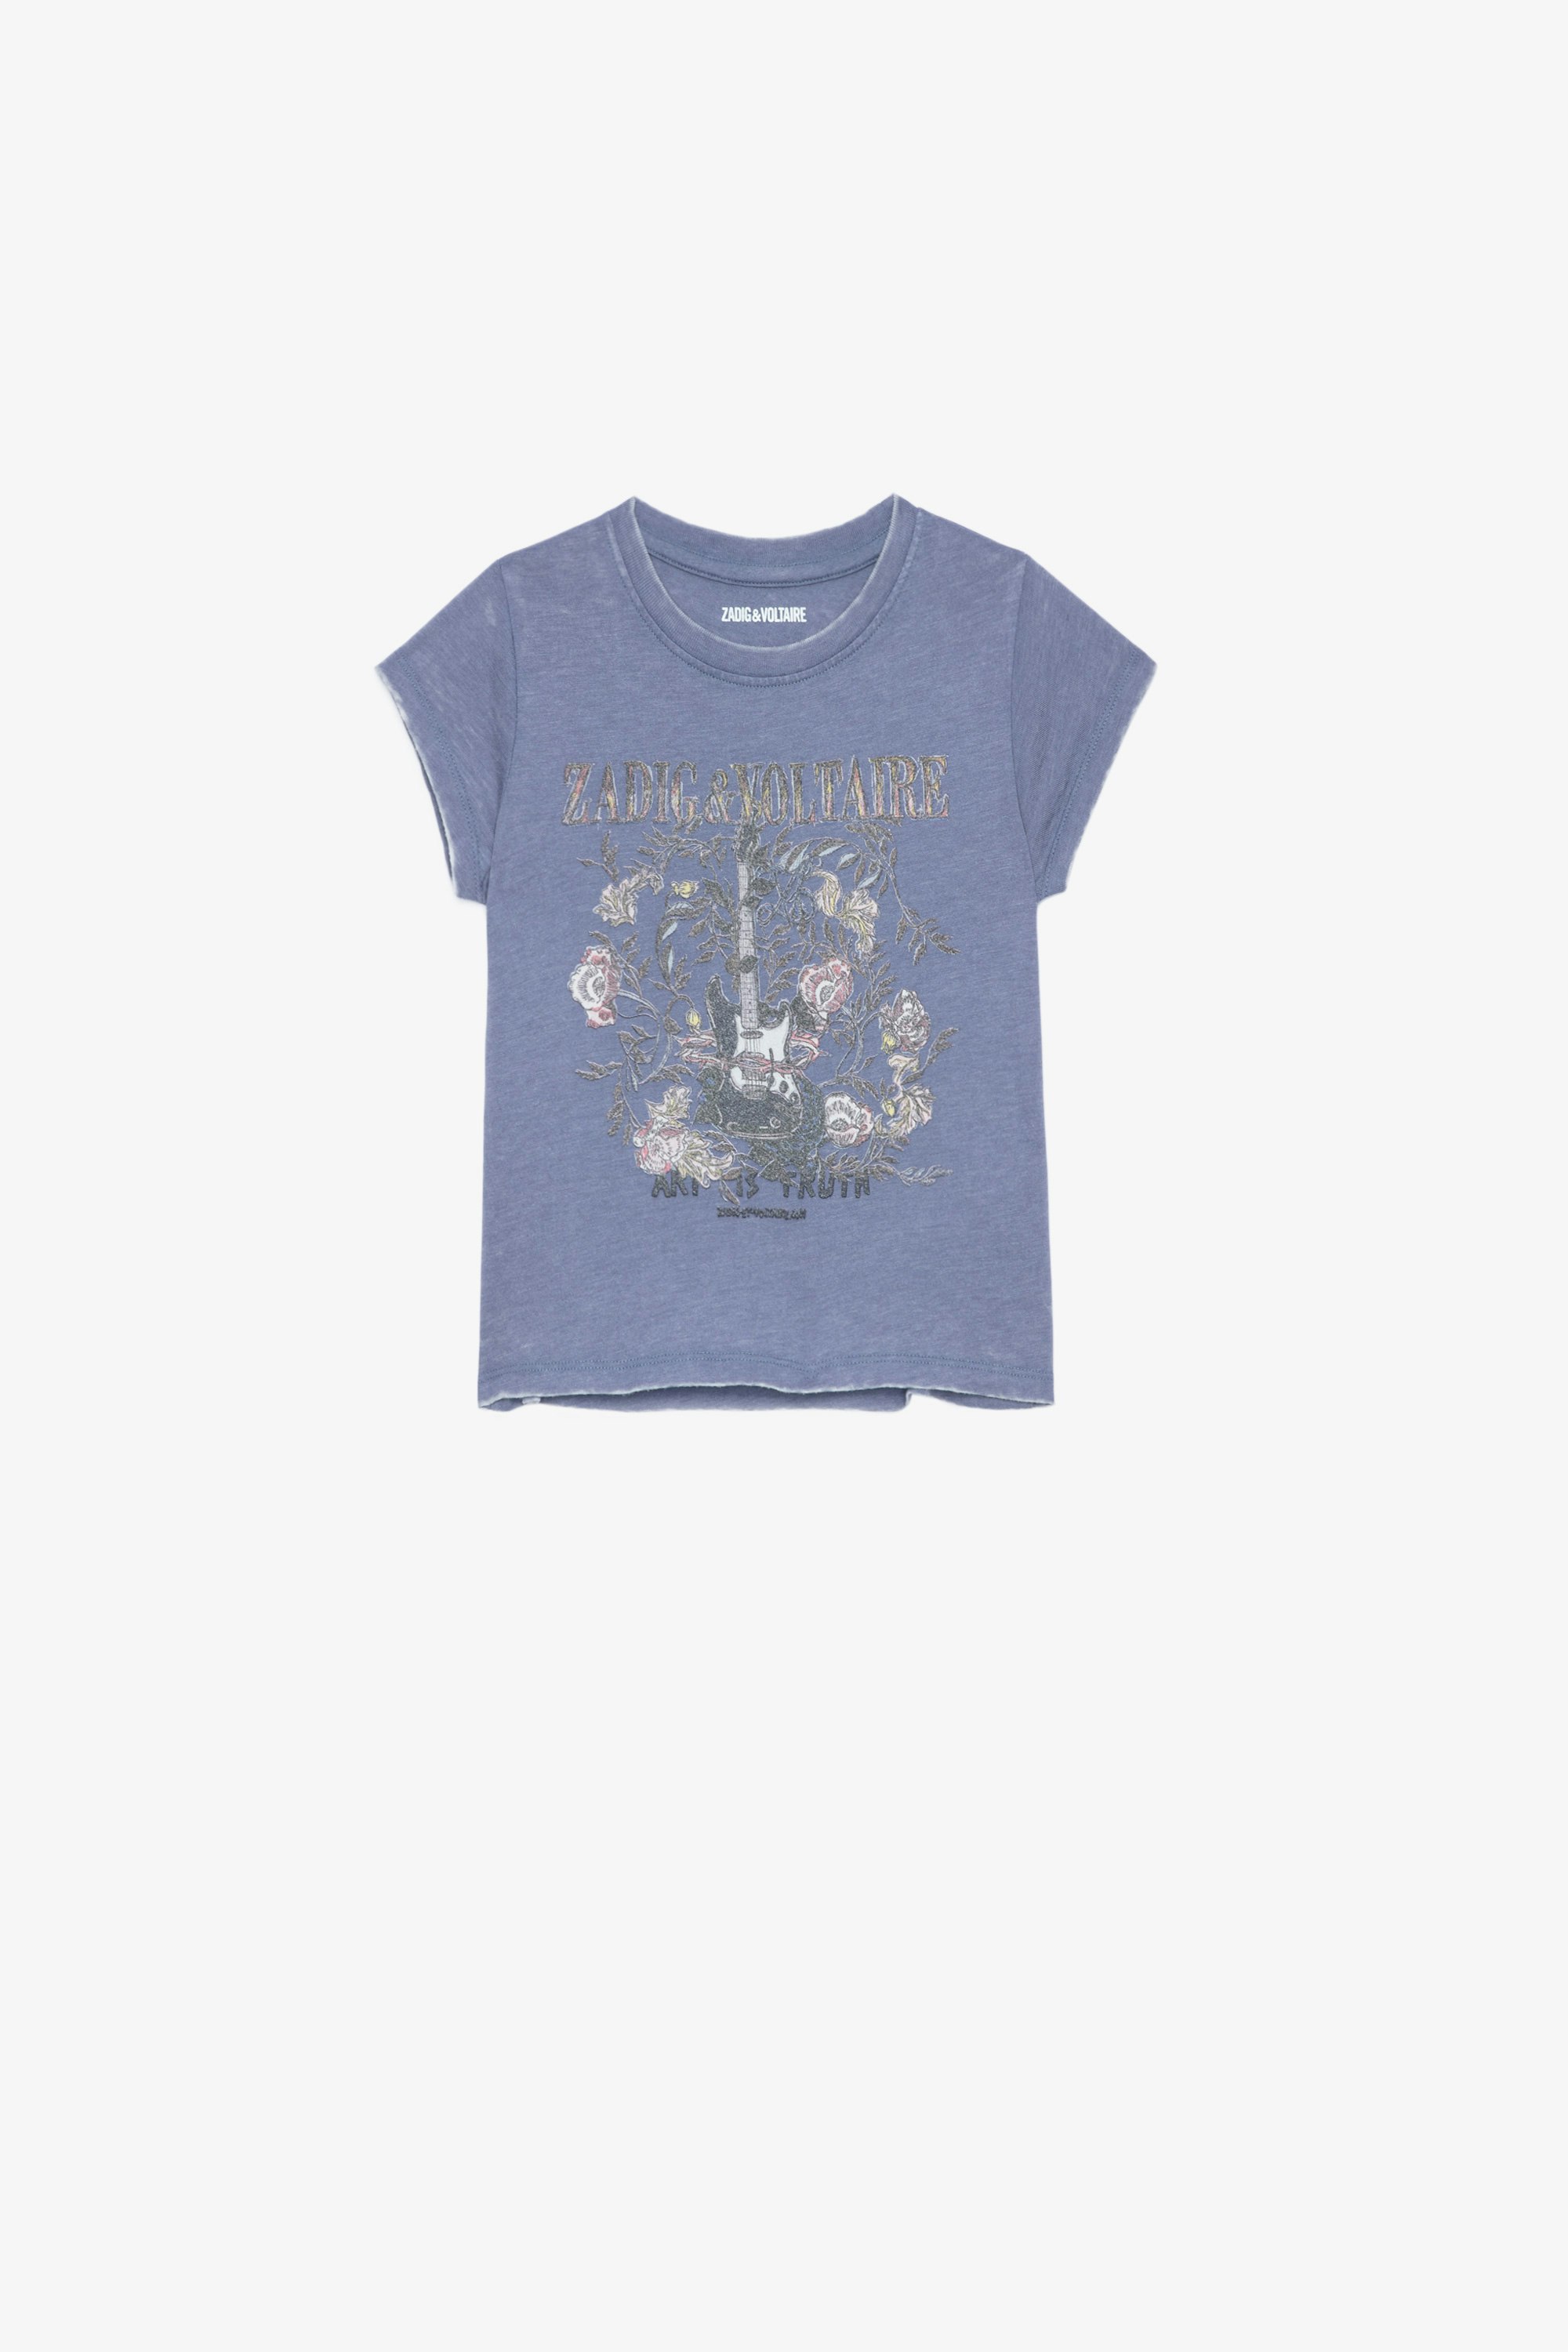 Camiseta Niels Infantil Camiseta azul grisáceo de punto de algodón infantil con estampado de guitarra